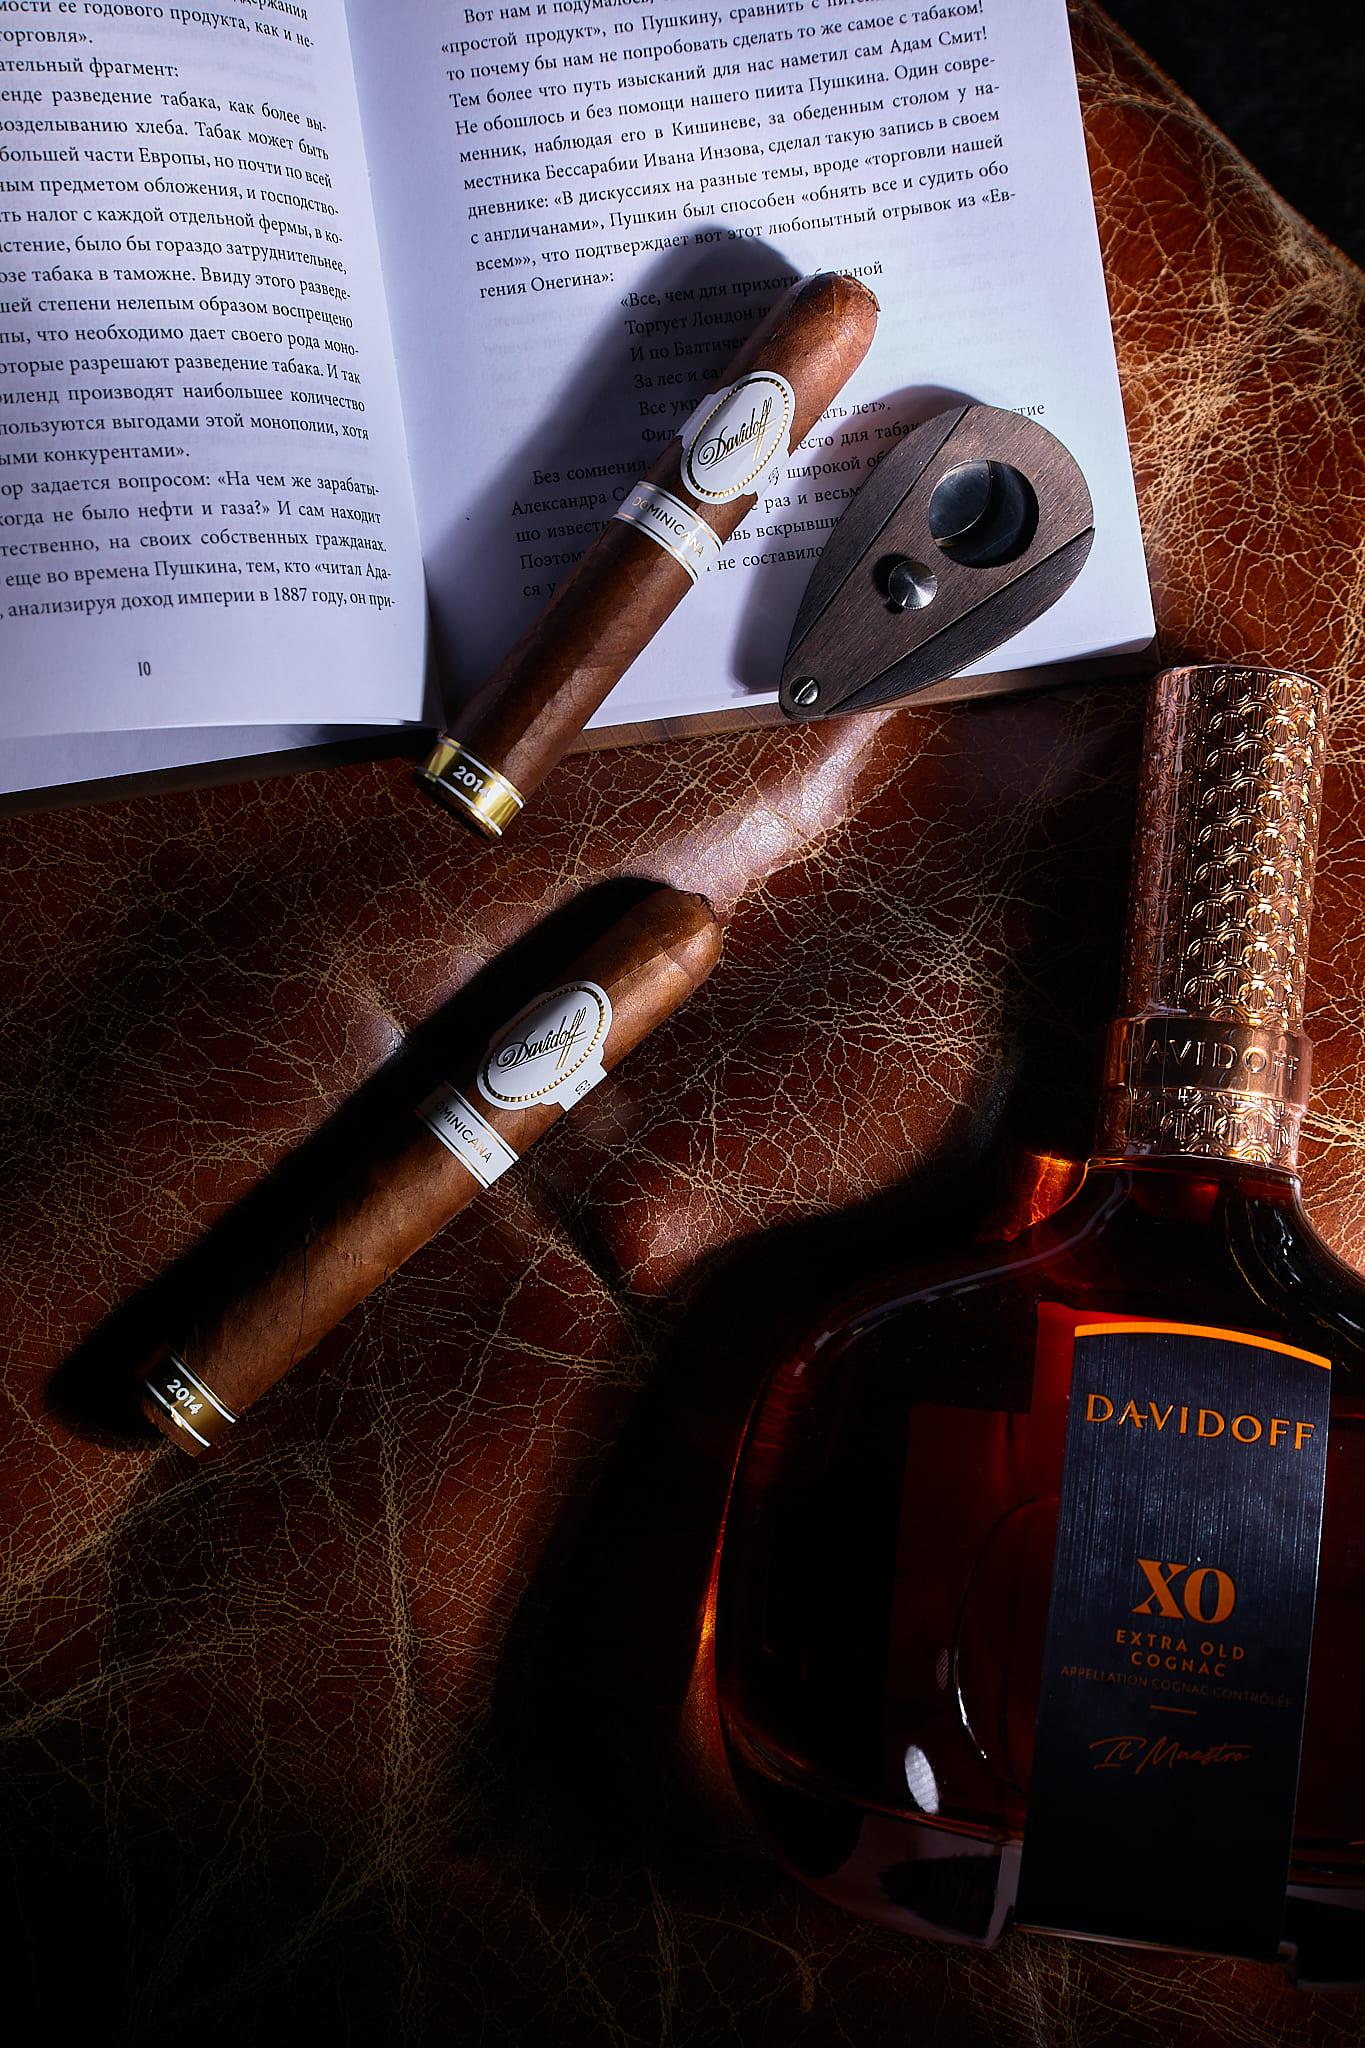 Сигары Davidoff Dominicana и коньяк Cognac Davidoff XO by Thomas Hine